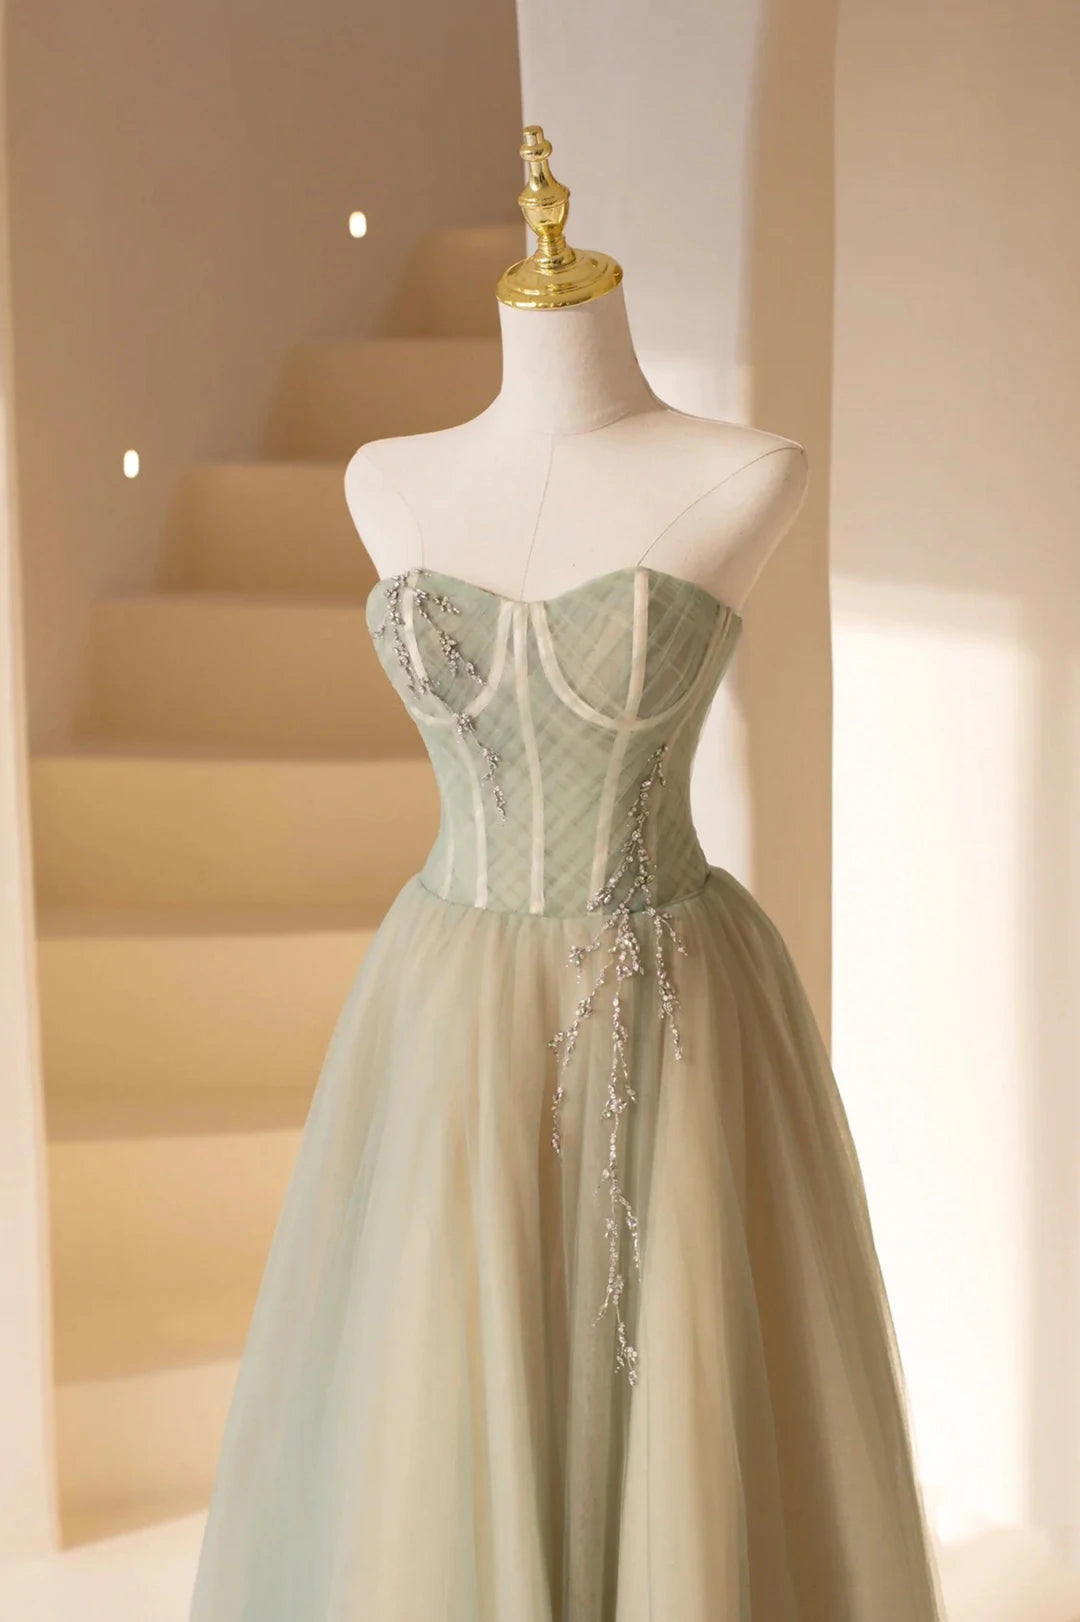 Green Strapless Tulle Long Prom Dress, Beautiful Sweetheart Neck Evening Dress